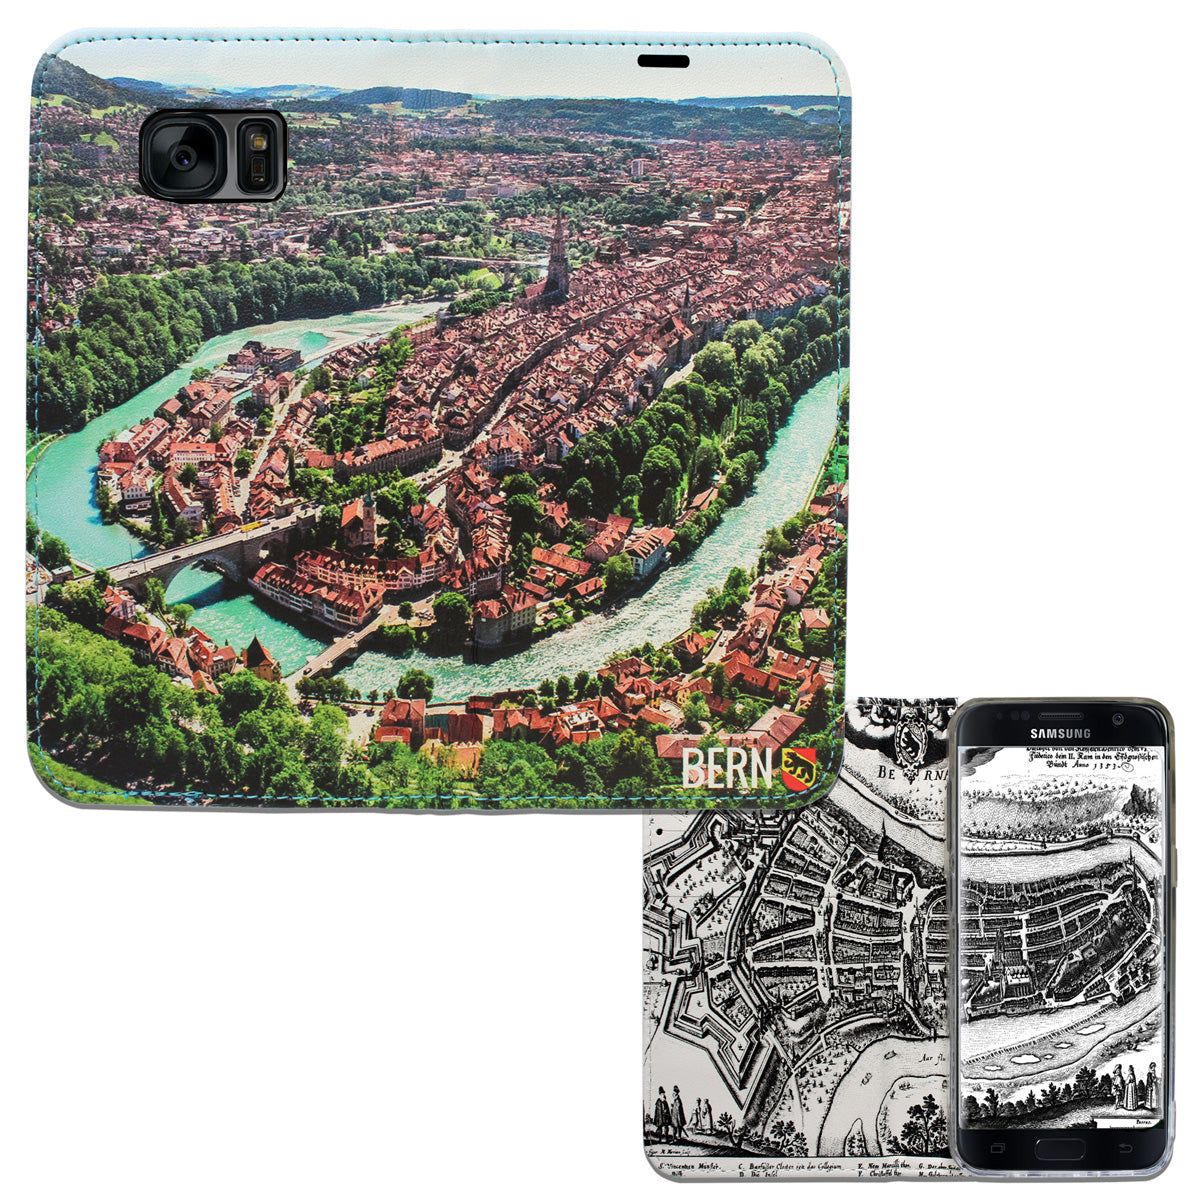 Coque Bern City Panorama pour Samsung Galaxy S7